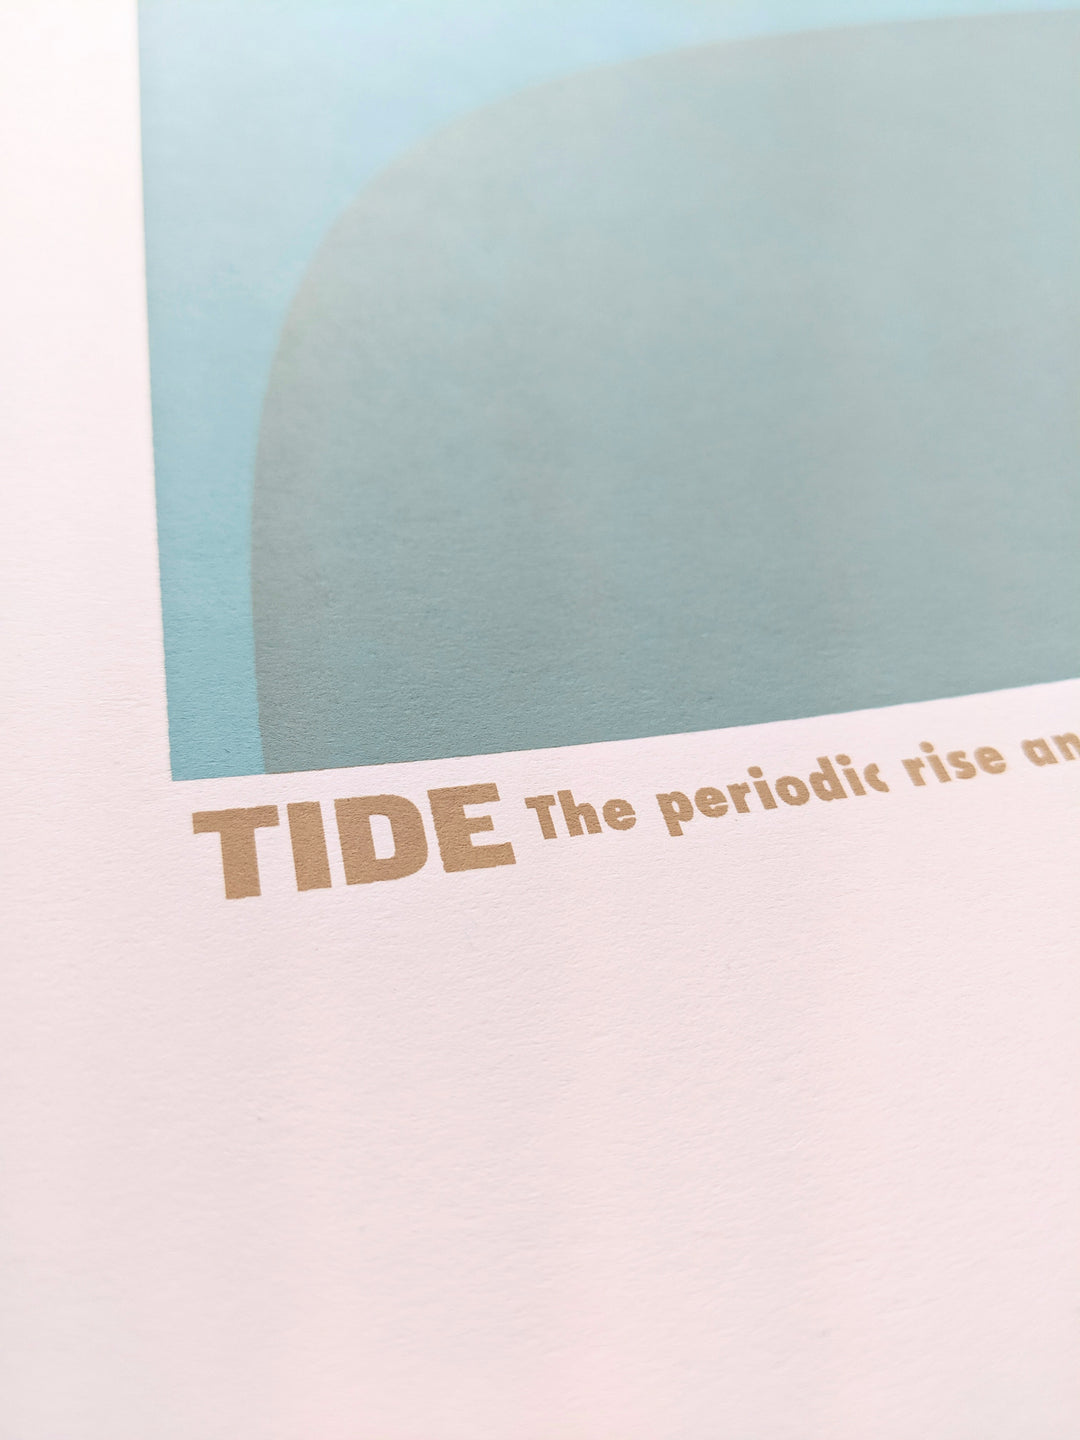 TIDES Print by Brainstorm